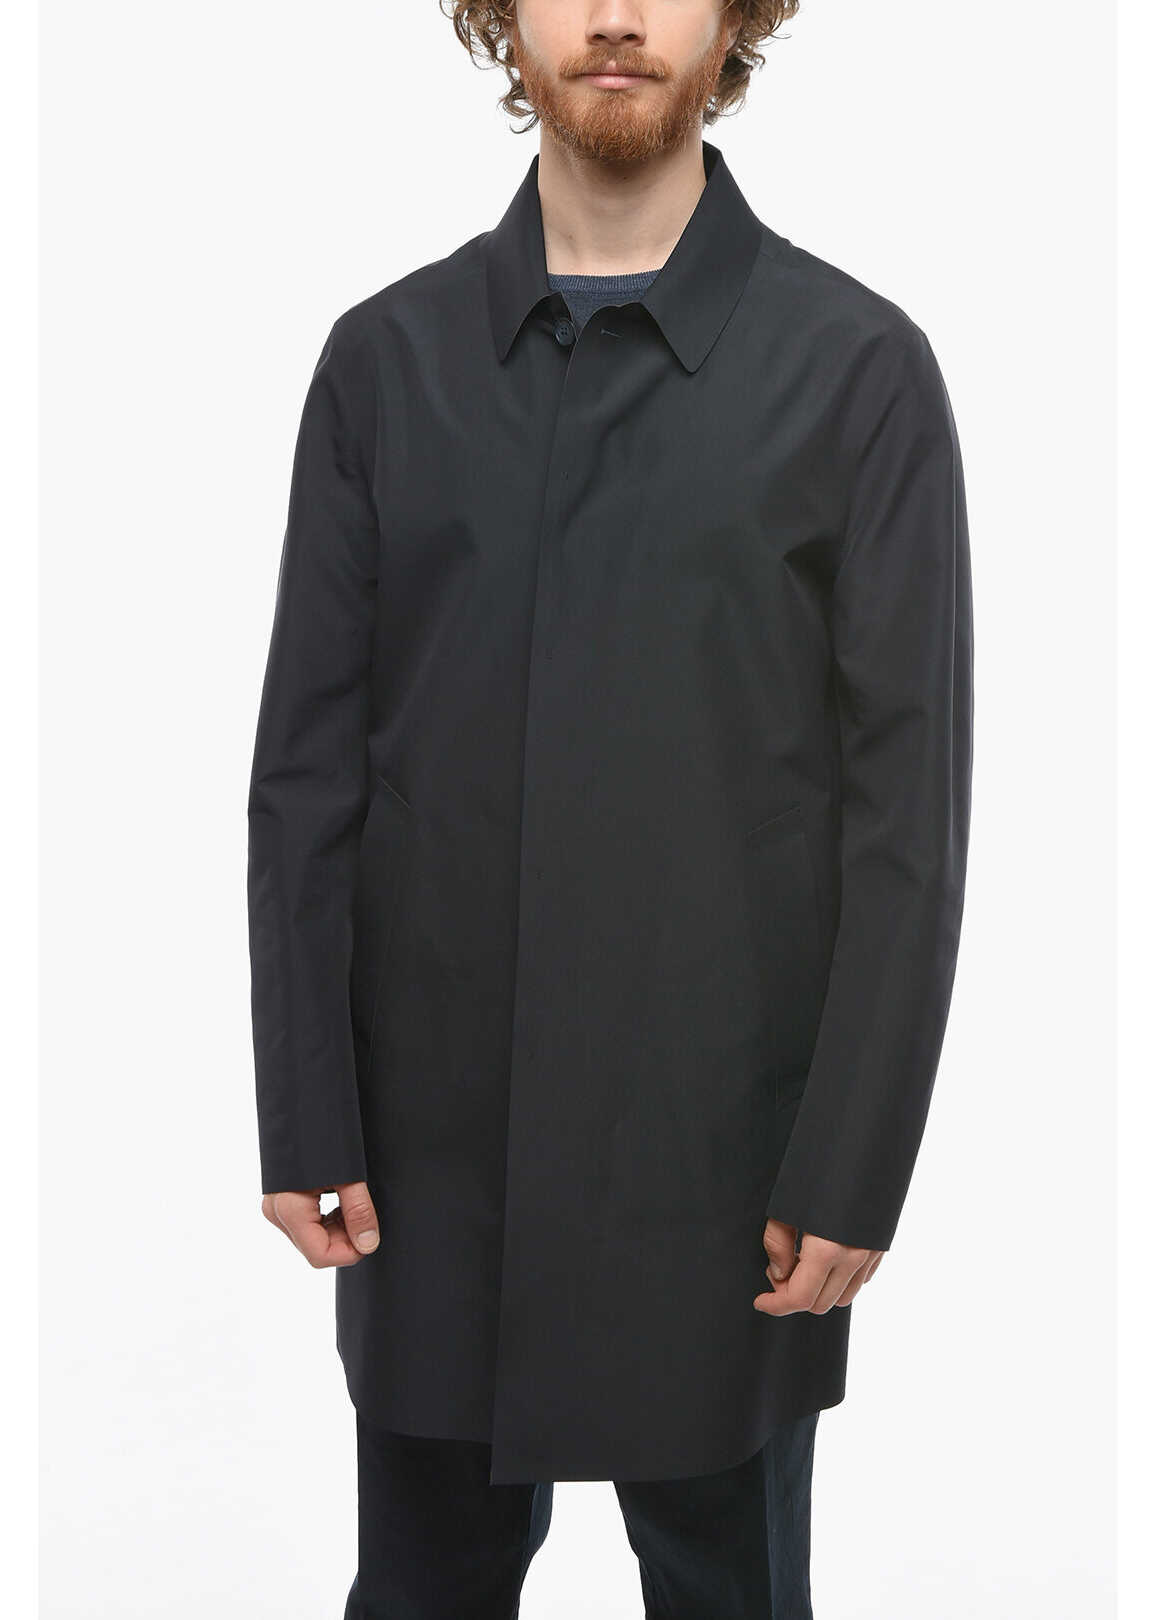 CORNELIANI 1930 Waterproof Overcoat With Club Collar And Back Vent Black